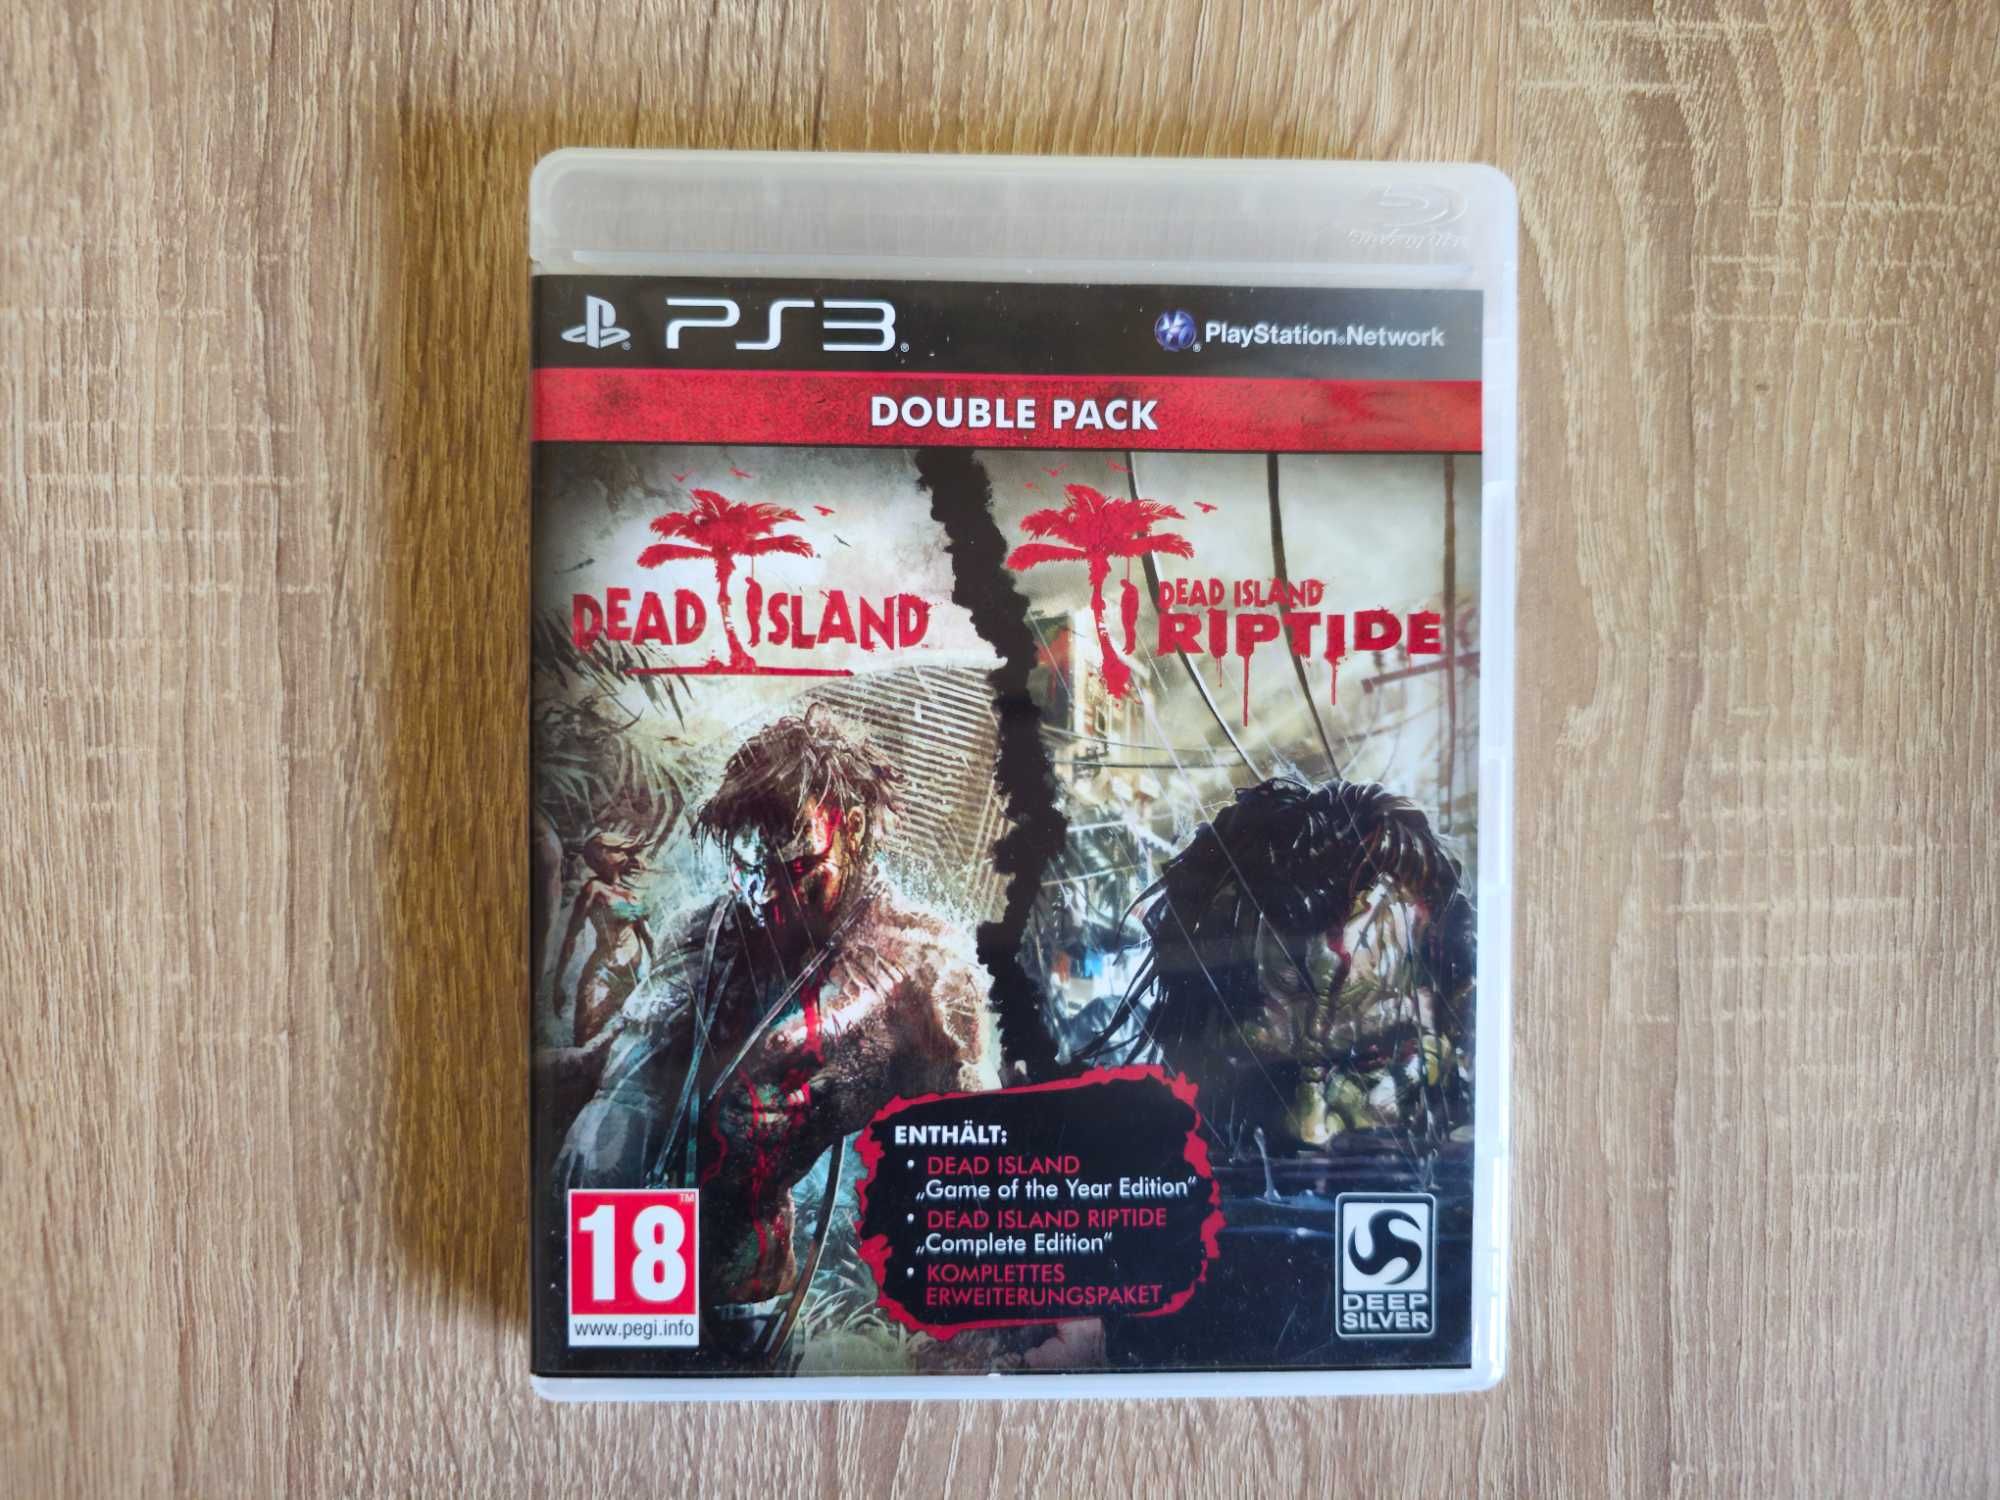 Dead Island + Dead Island Riptide за PlayStation 3 PS3 ПС3